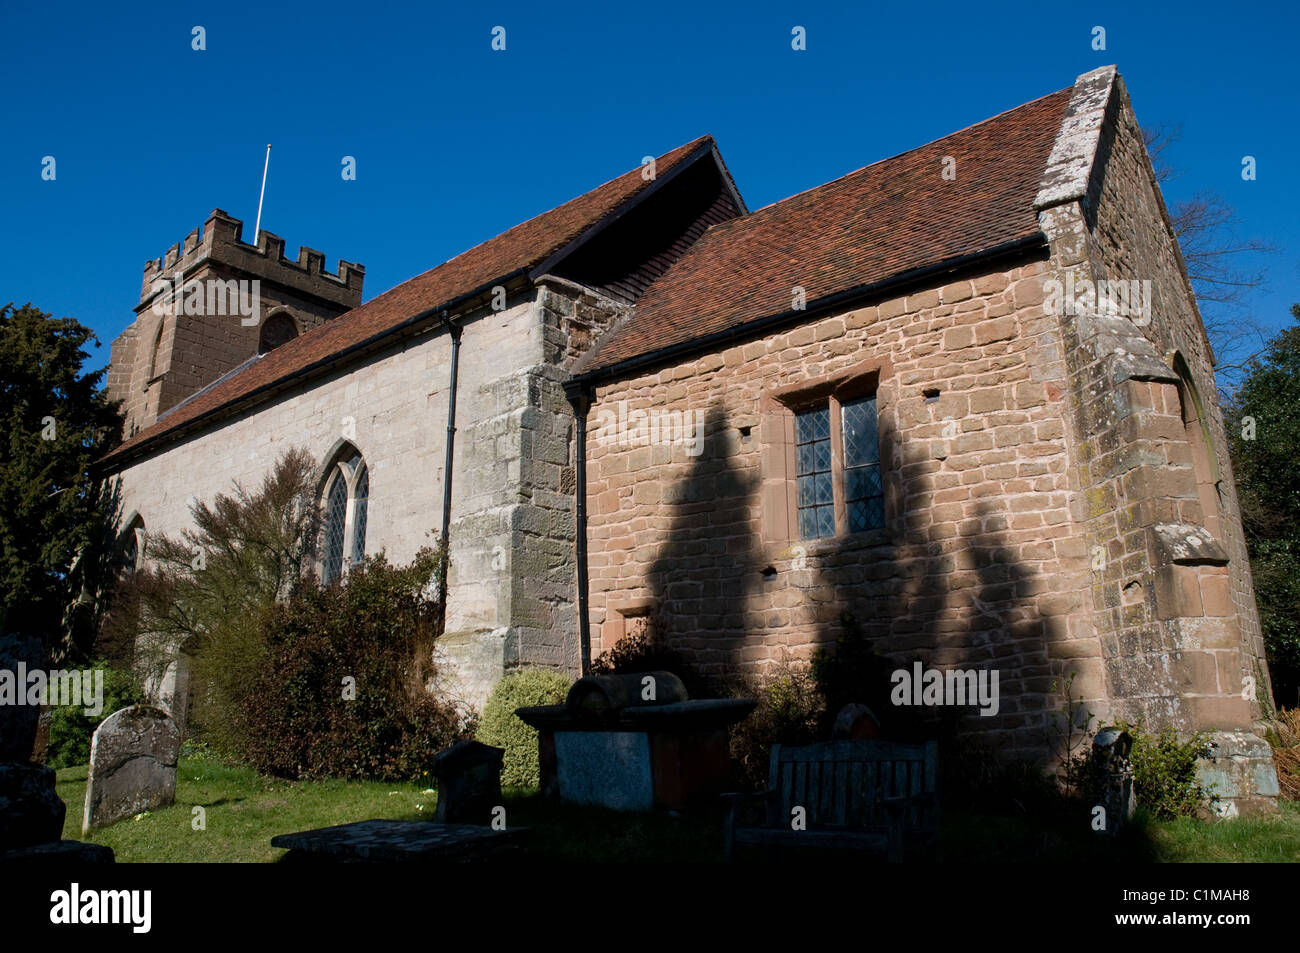 Ashow village church in Warwickshire, England. Stock Photo